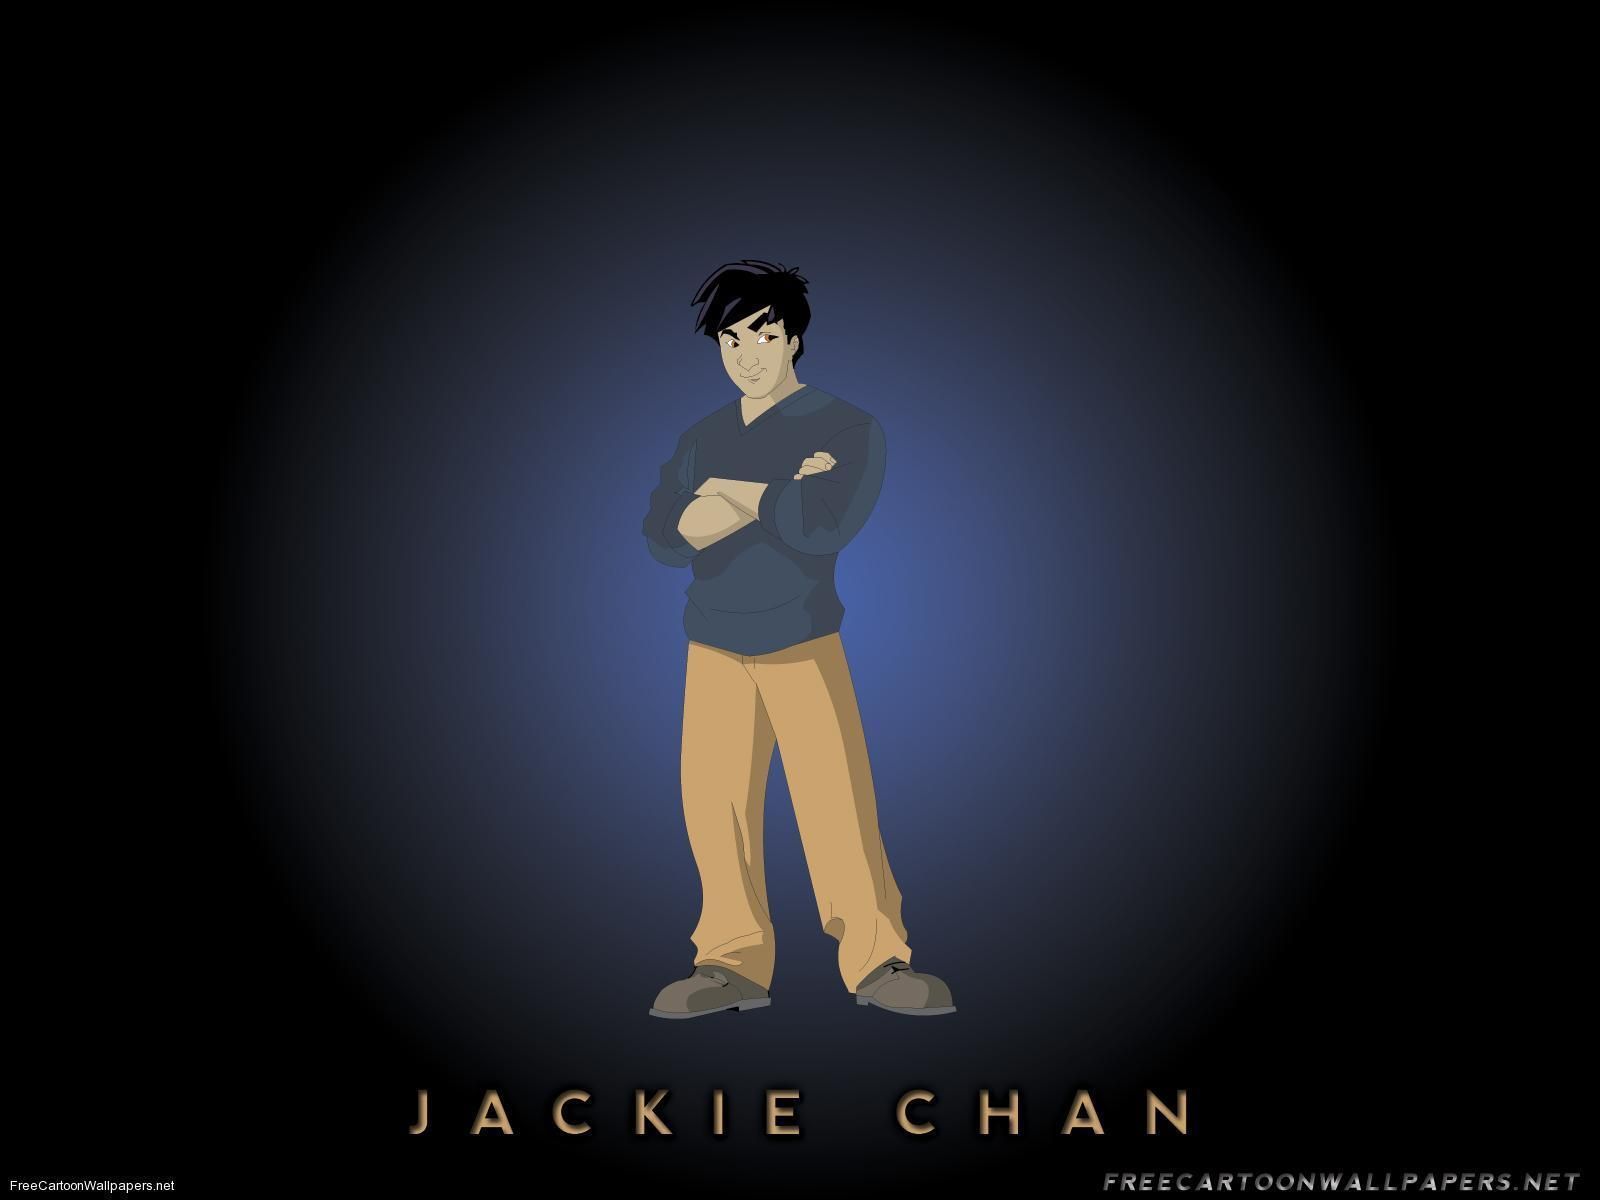 Jackie Chan Adventures Wallpaper Download free. Schauspieler